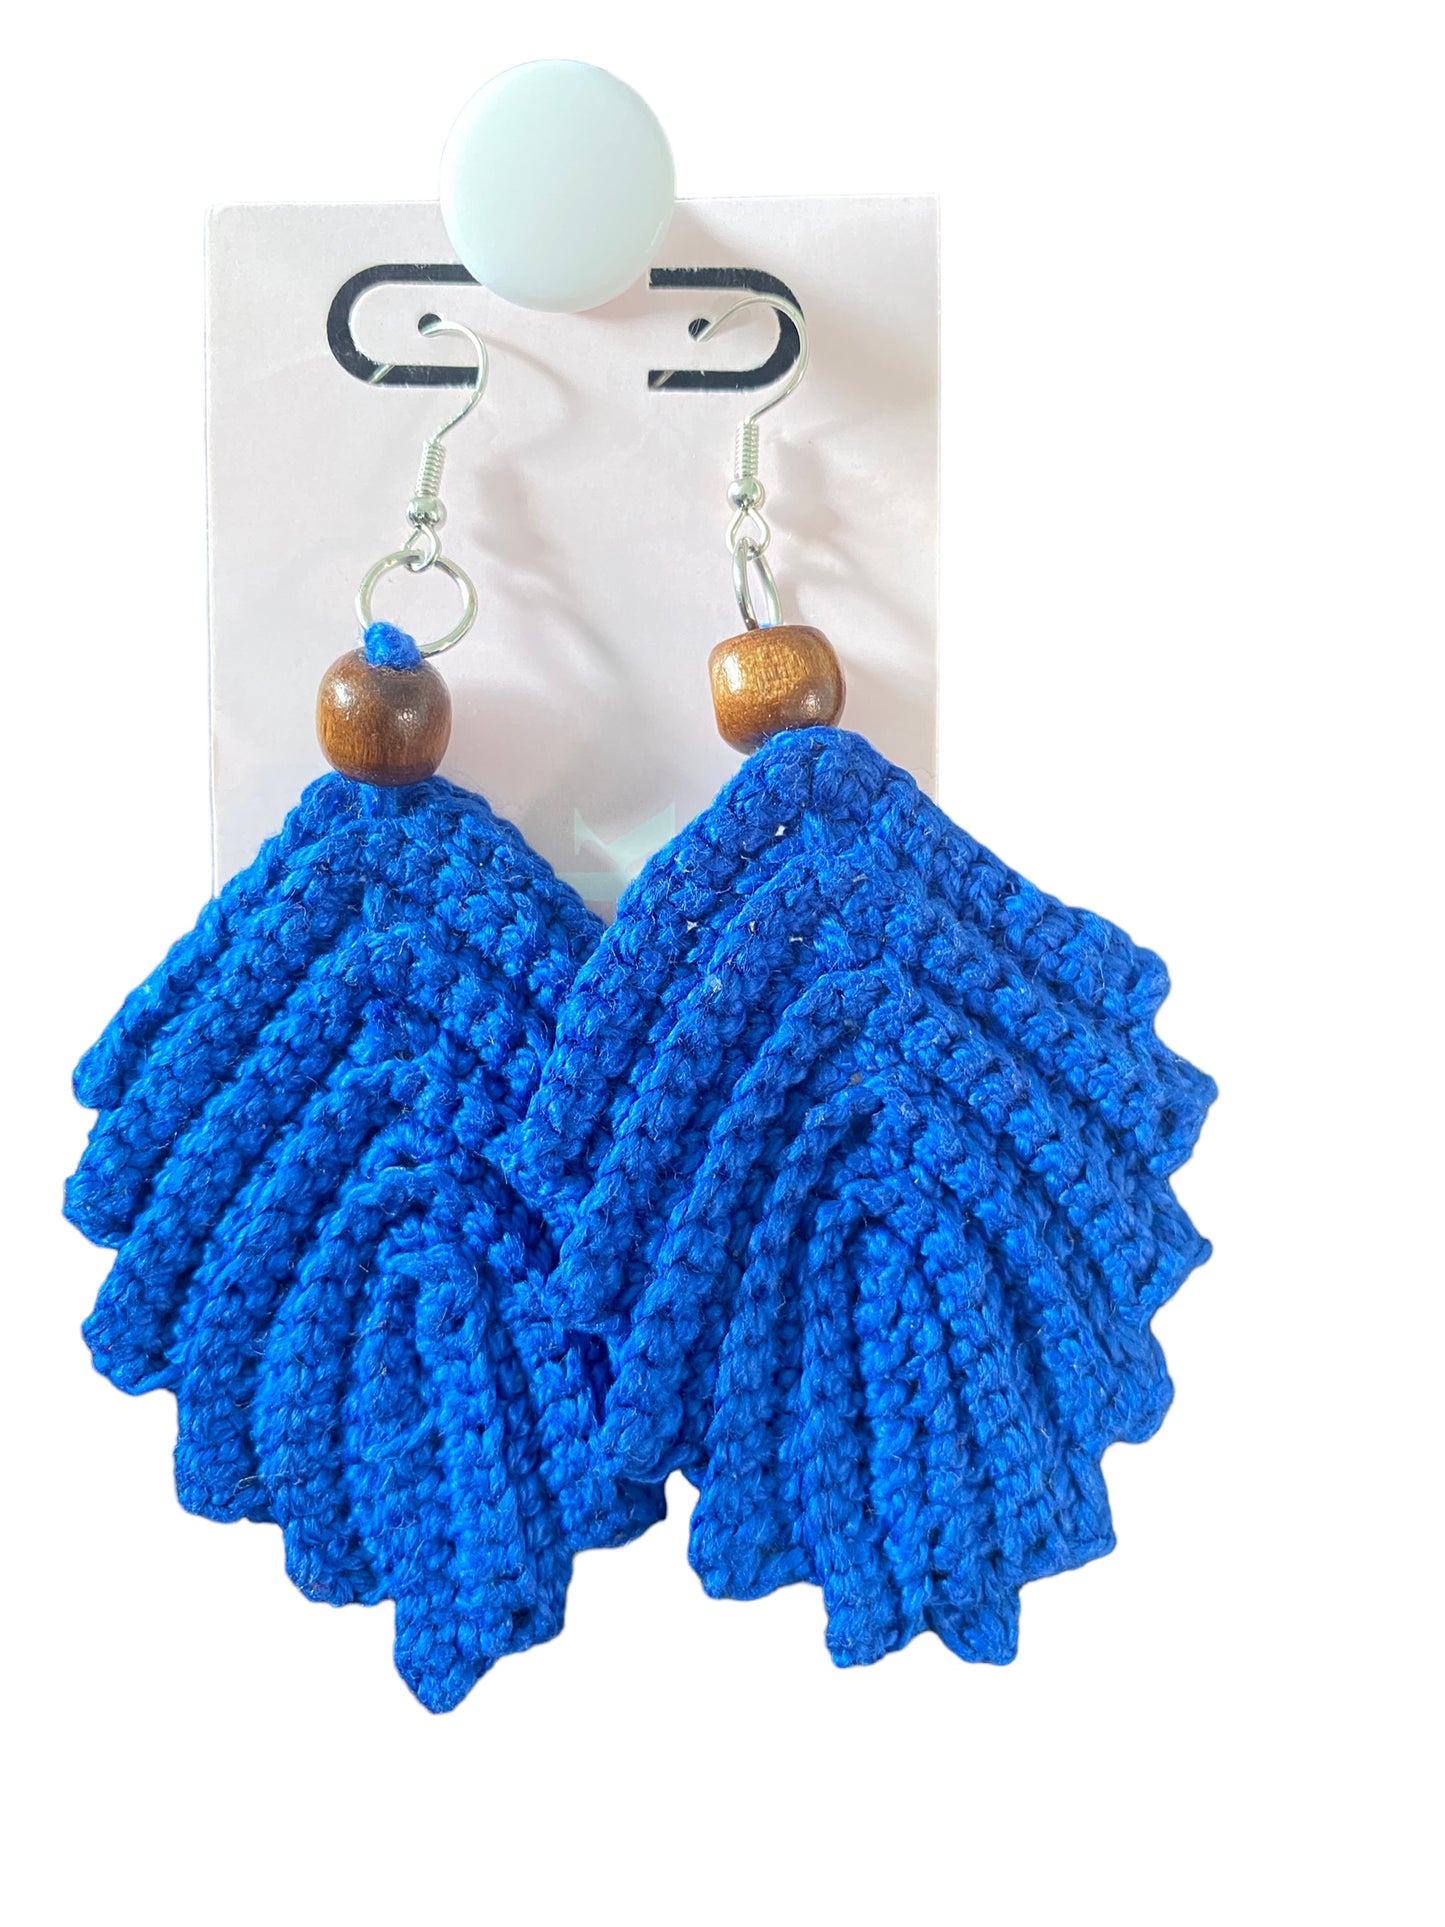 Royal Blue|Feather Earrings|Crochet|Handmade